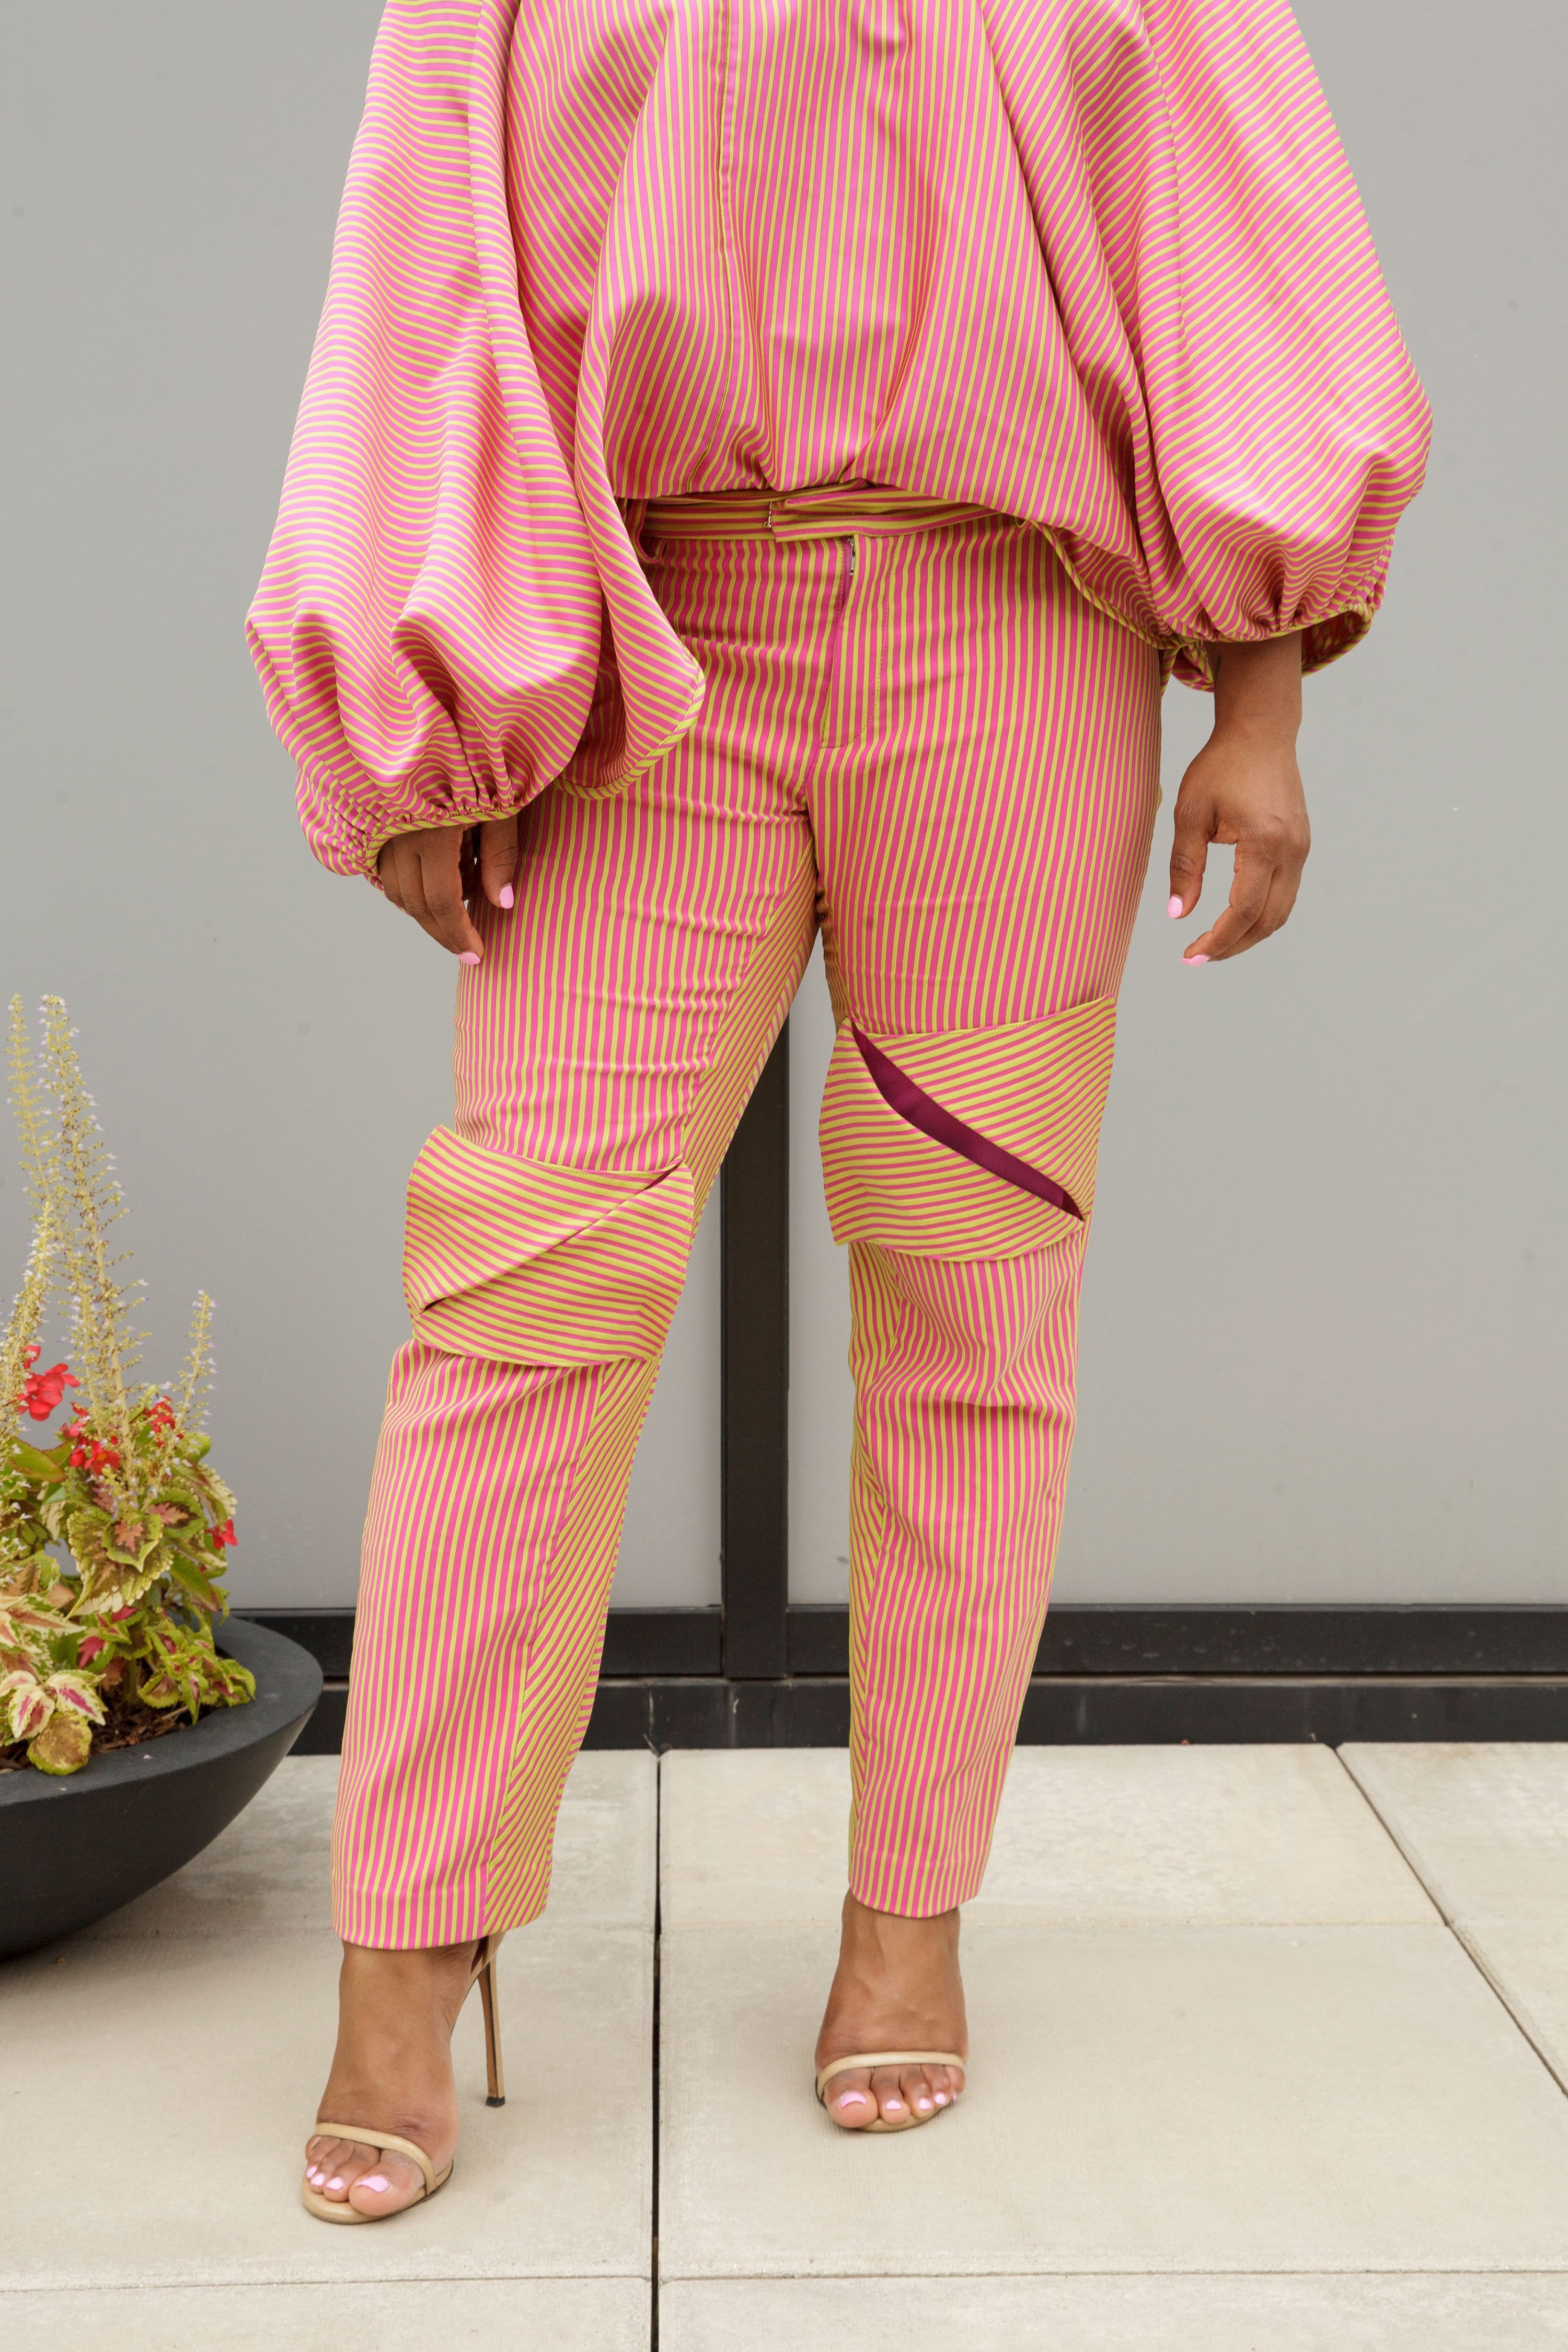 Pink 3/4 Length Dance Pants.